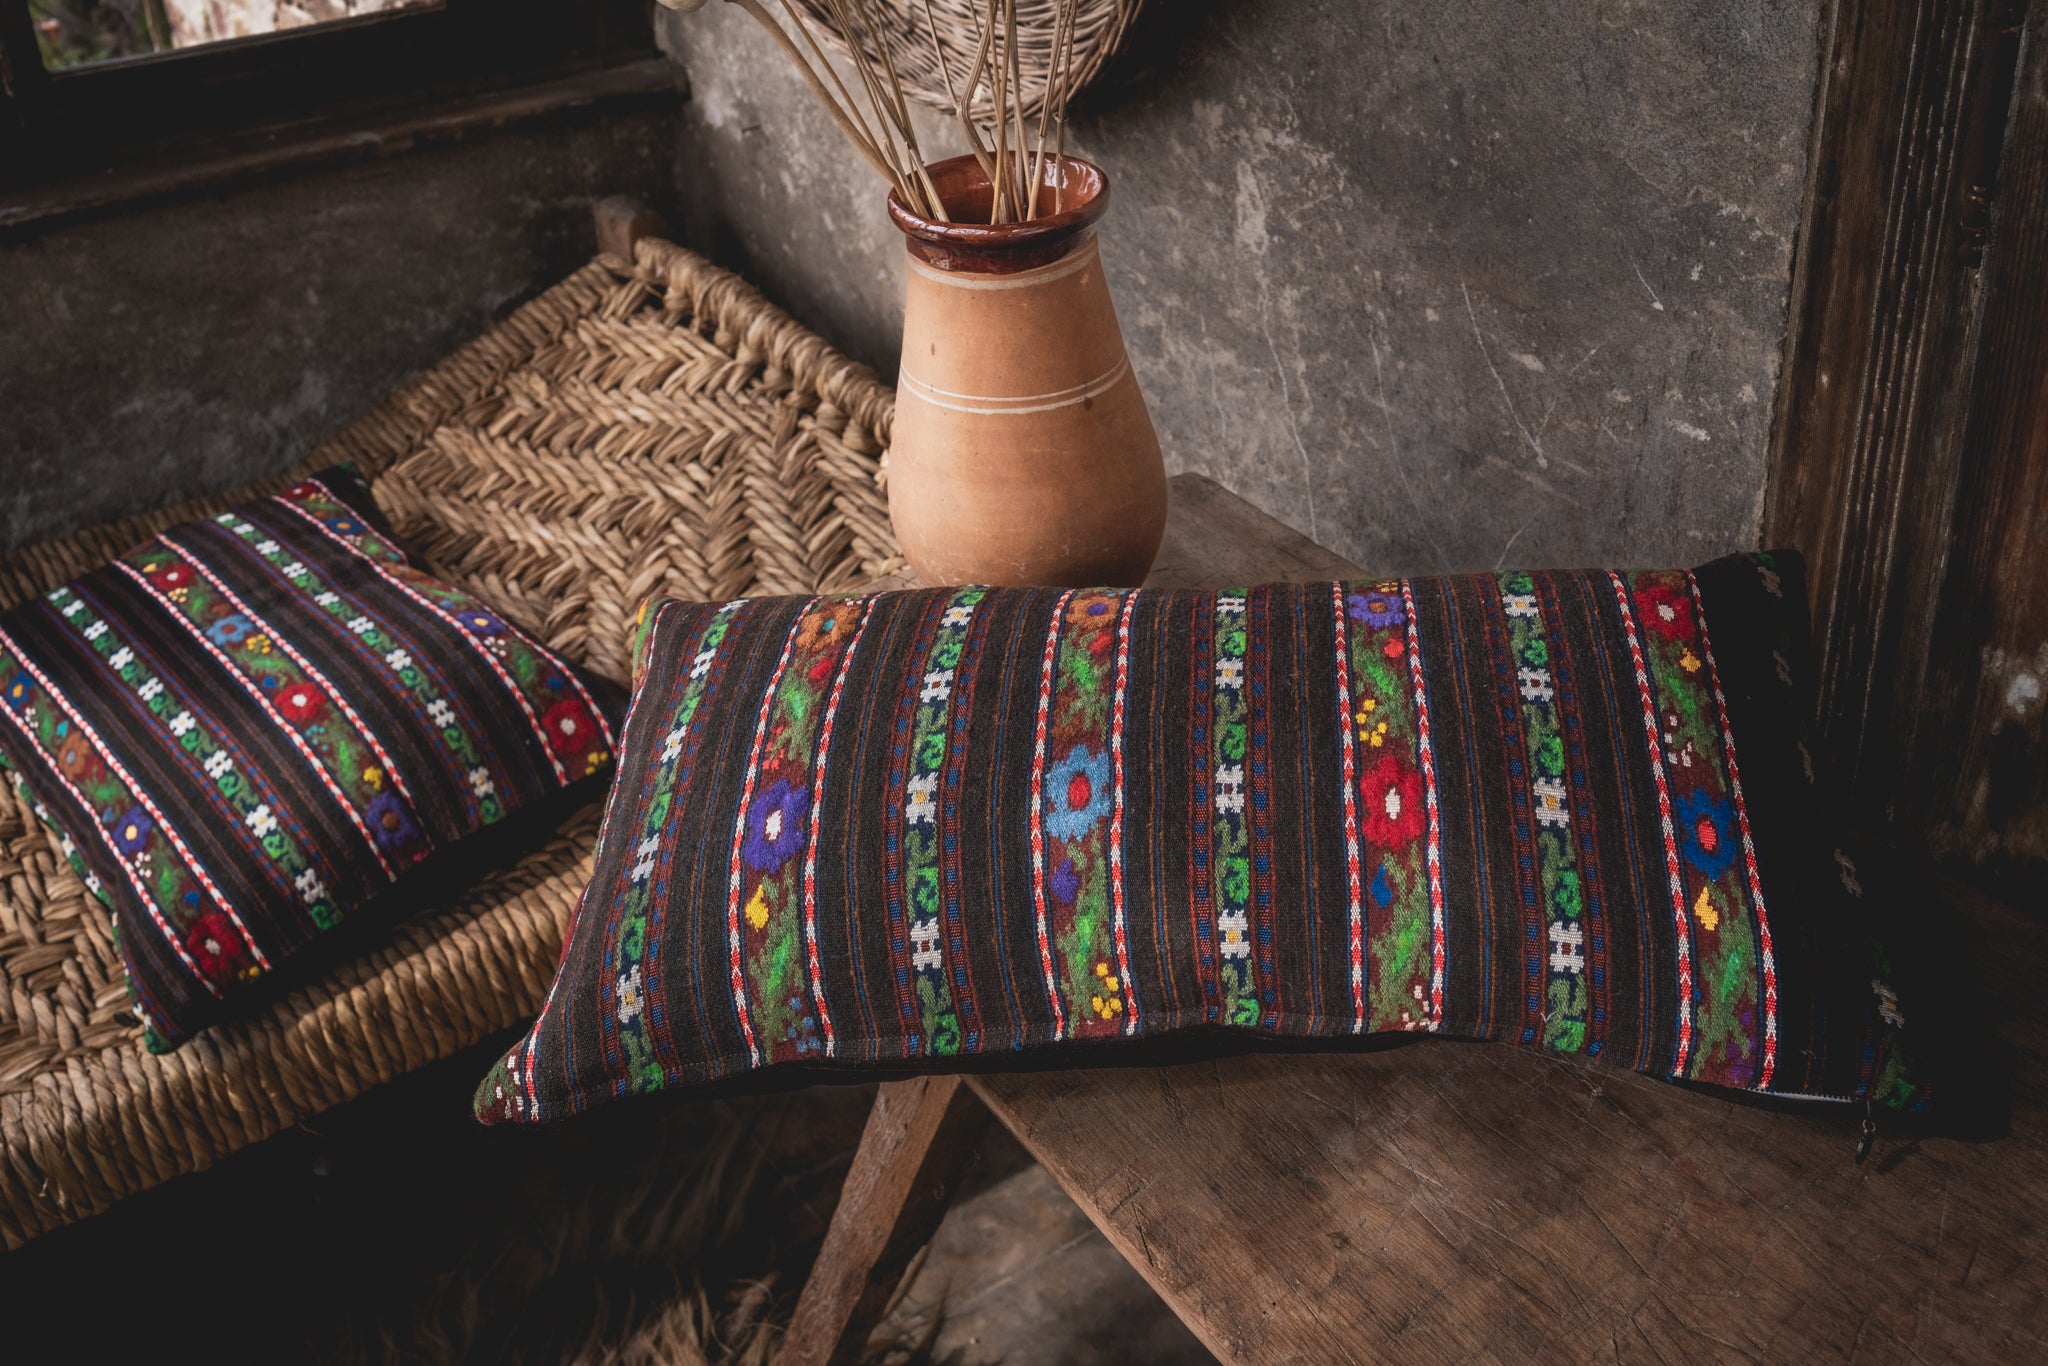 Pillow: Artifact textile, handwoven in Romania - P411